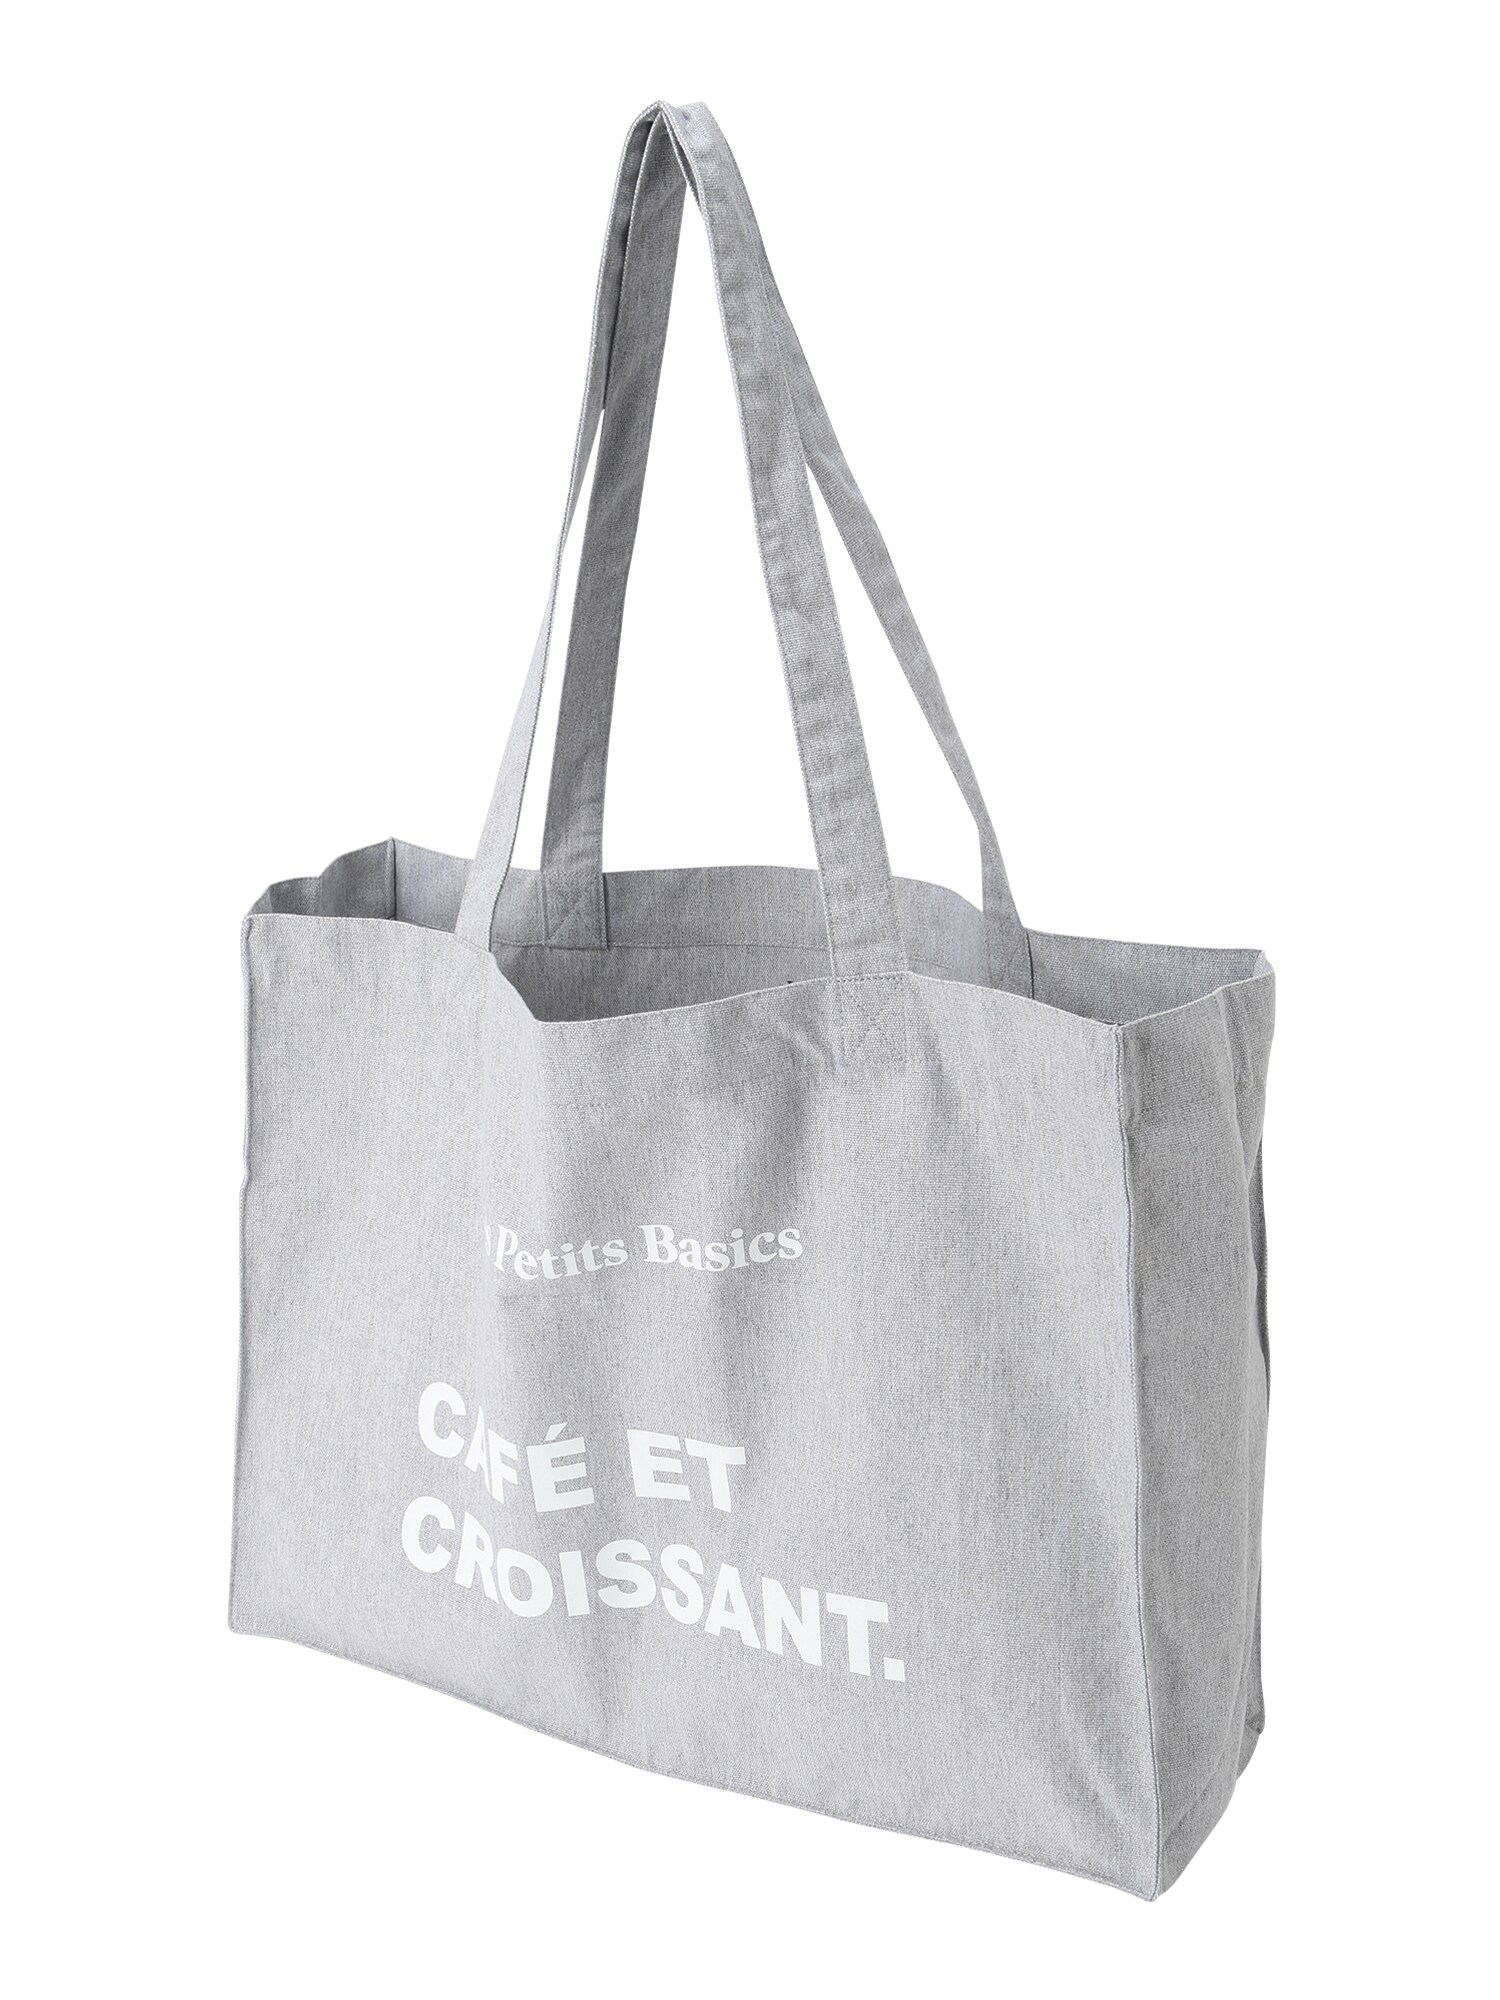 Les Petits Basics Pirkinių krepšys 'Café & croissant' margai pilka / balta